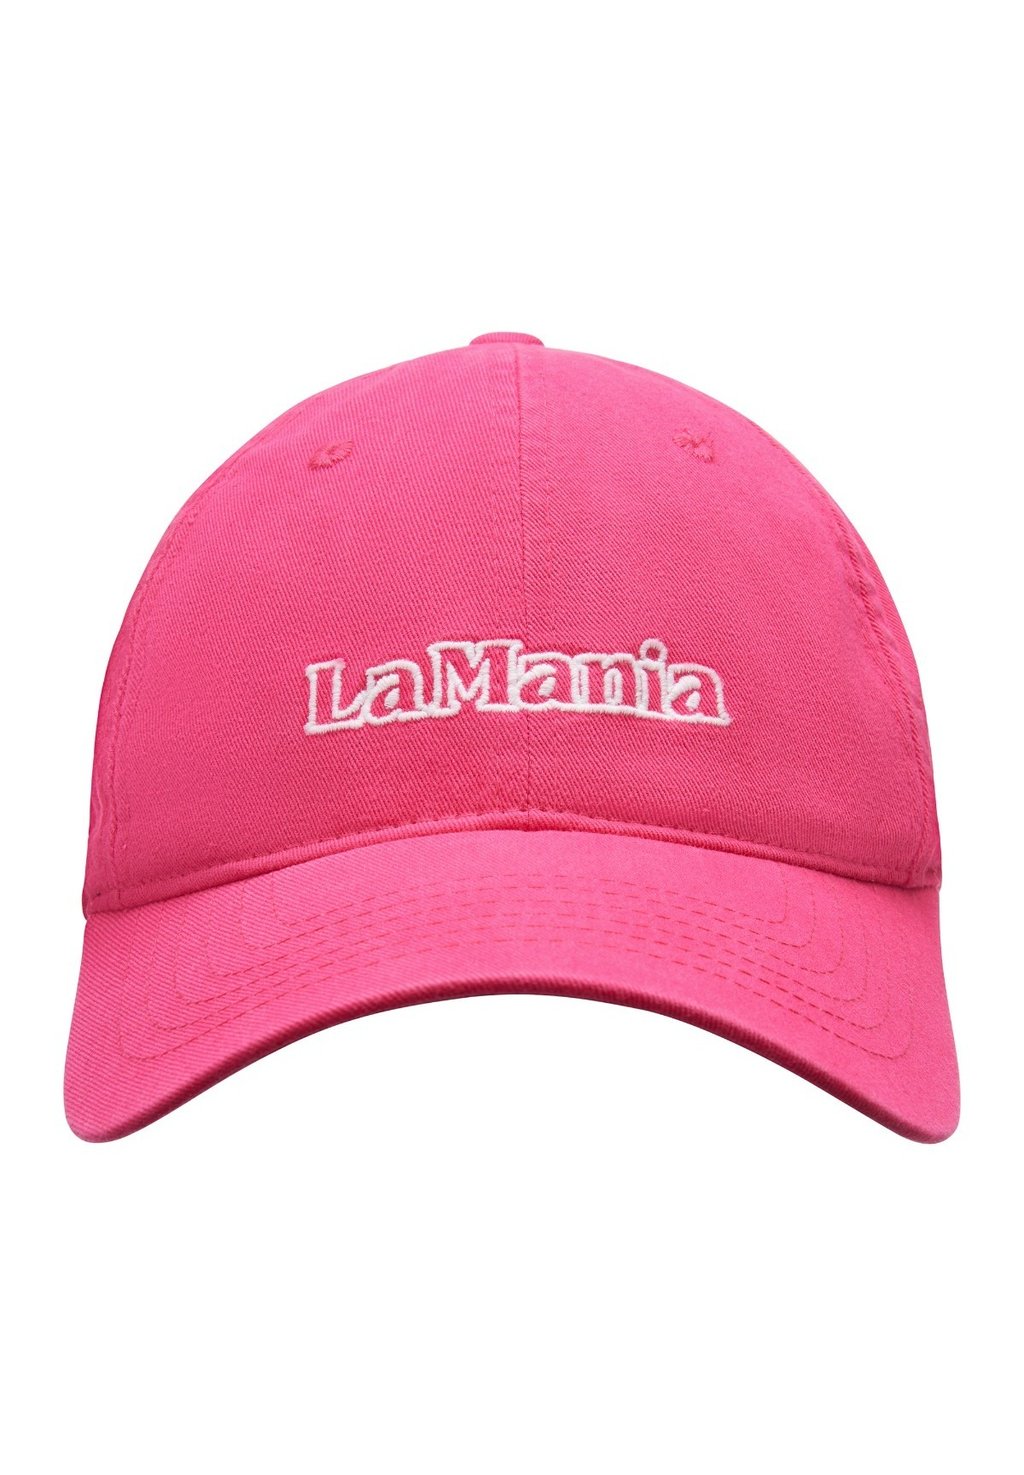 Кепка LA MANIA, розовый